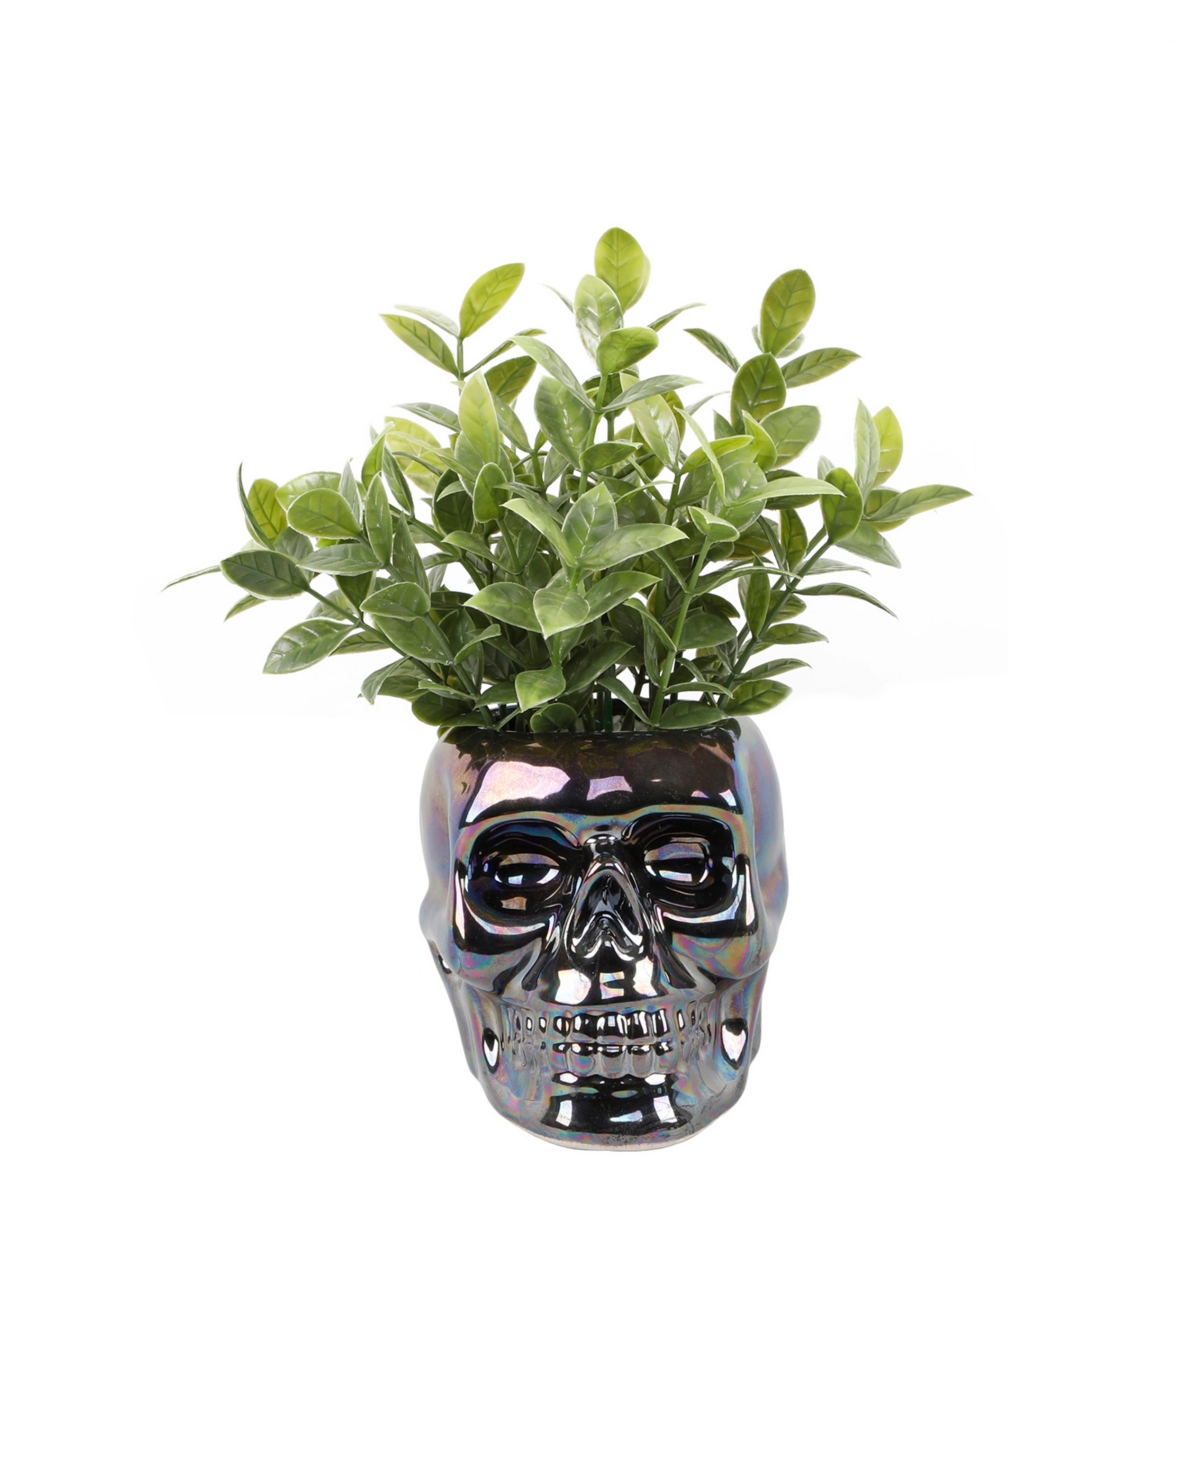 8.5" Artificial Tealeaf in Metallic Skull Ceramic - Metallic Black, Green-Succulent